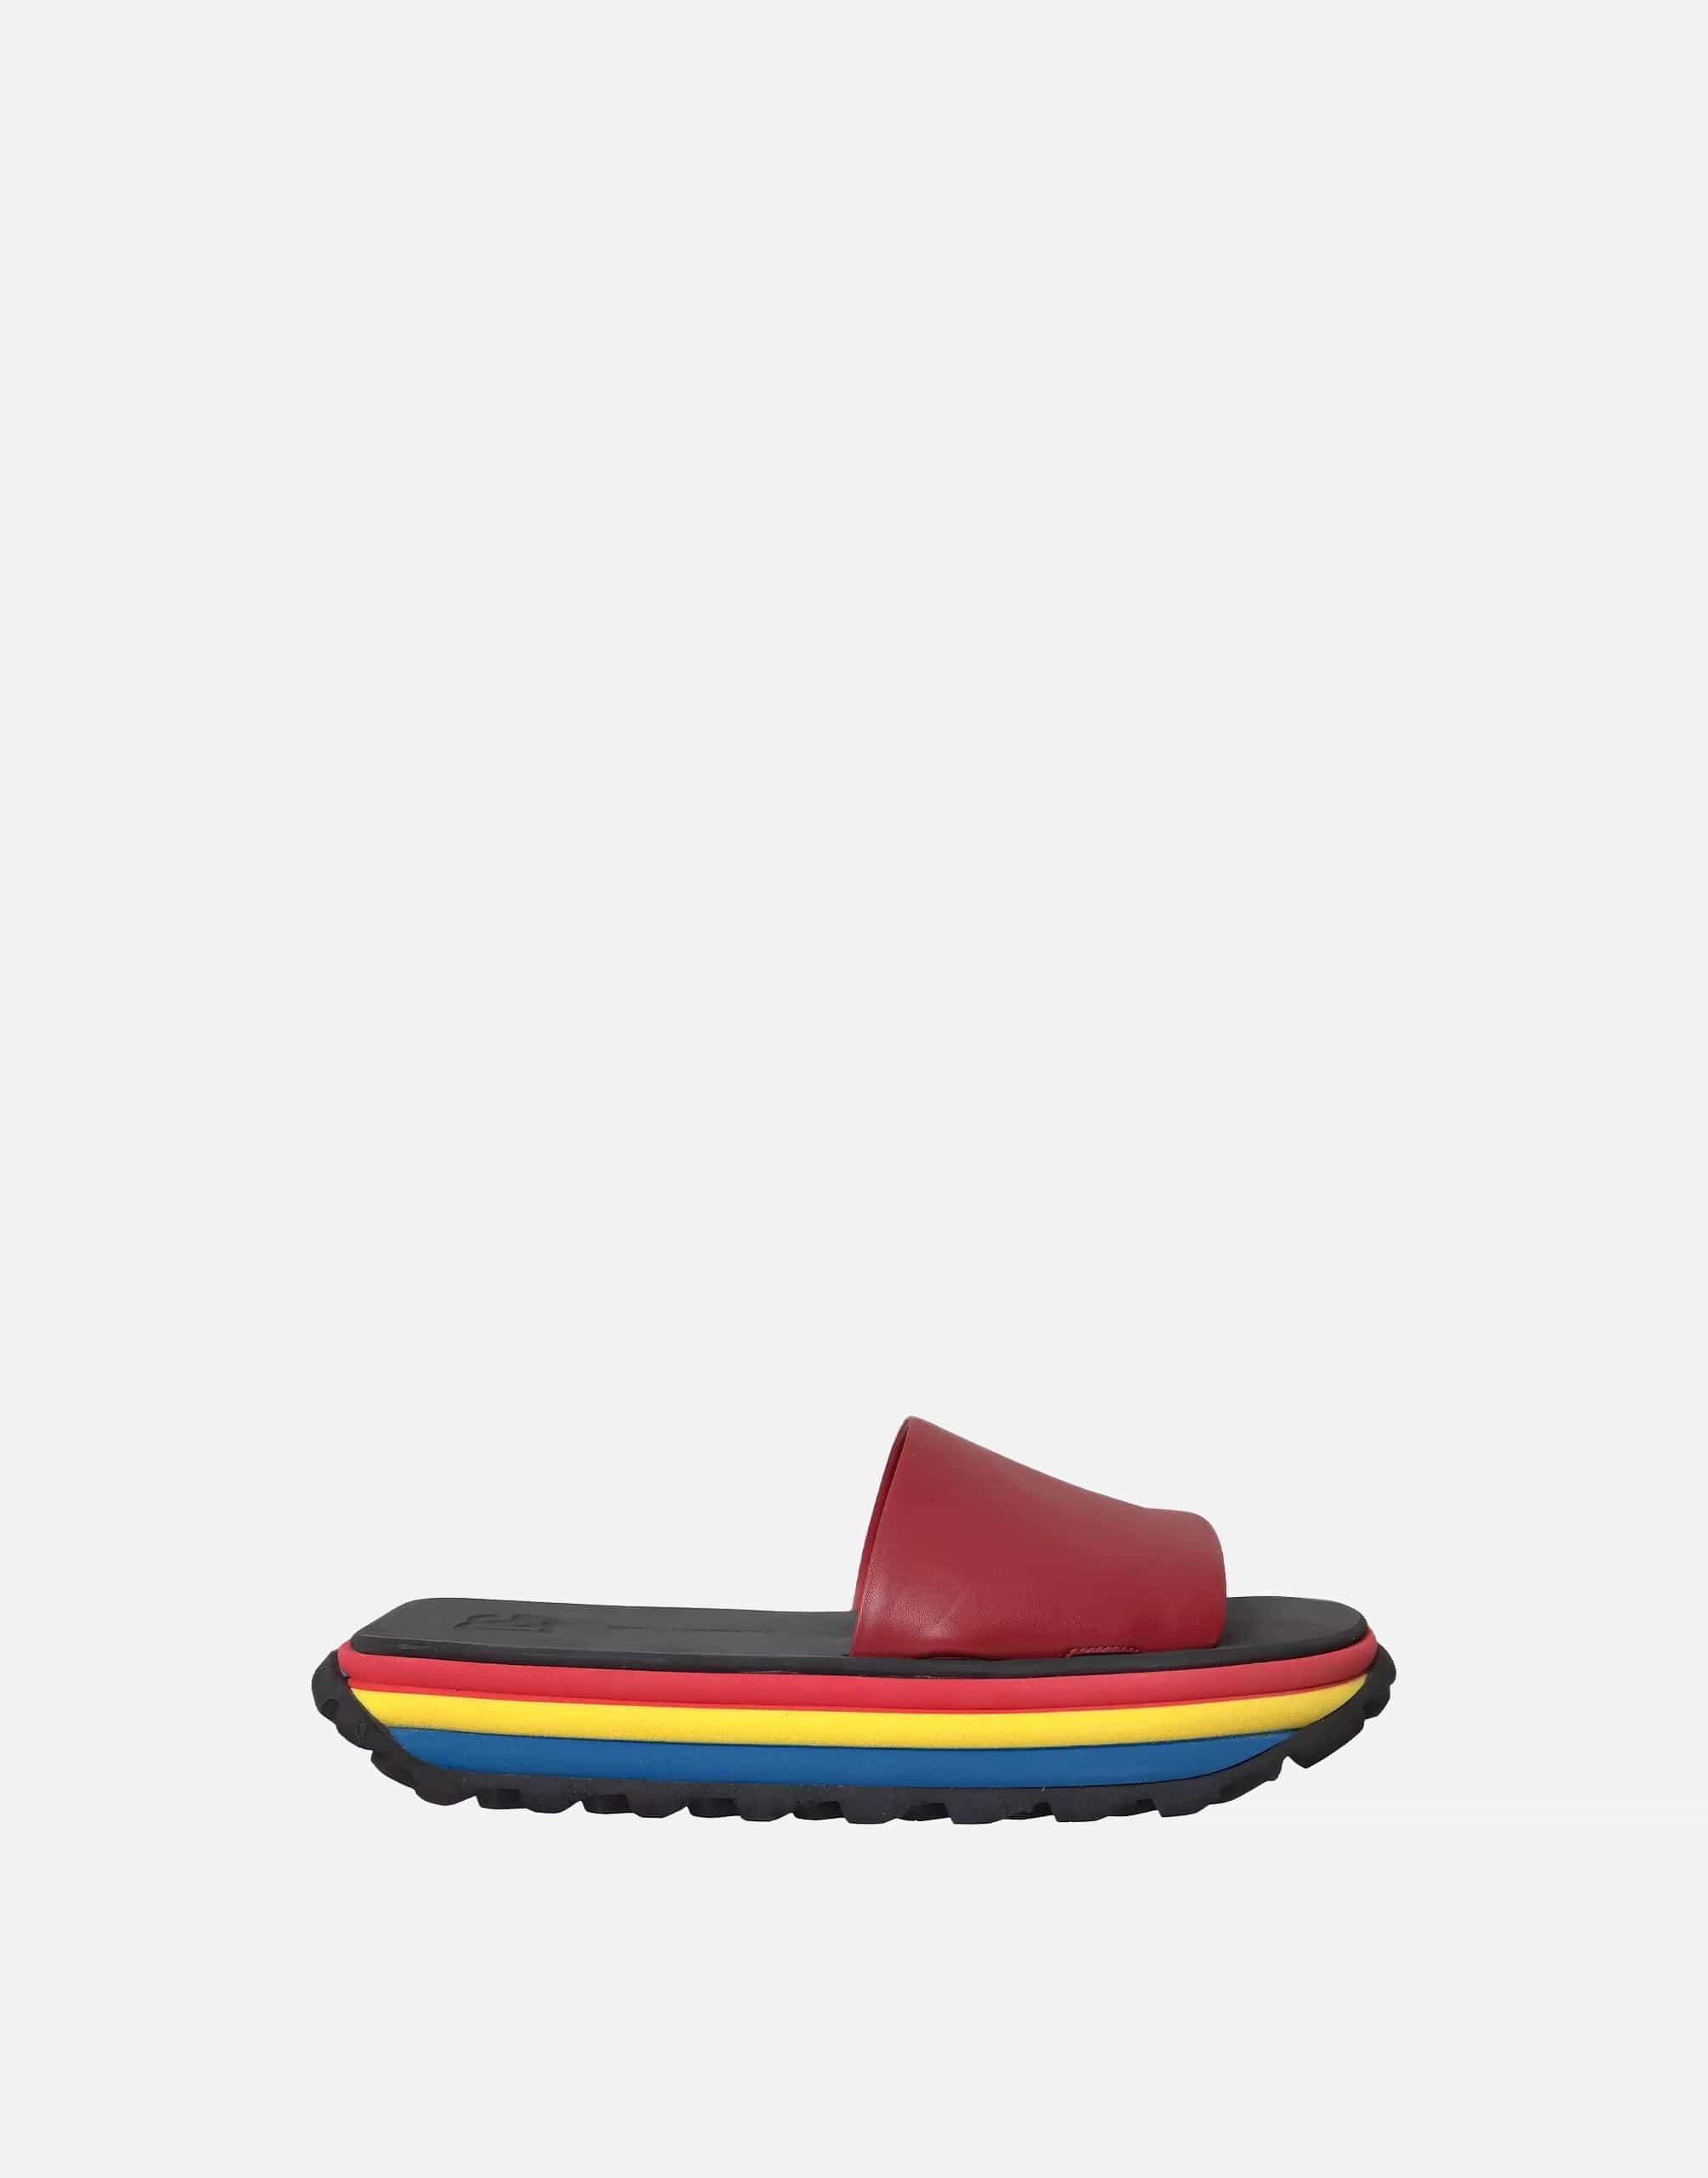 Dolce & Gabbana Multicolor Nappa DEVOTION Sandals Shoes